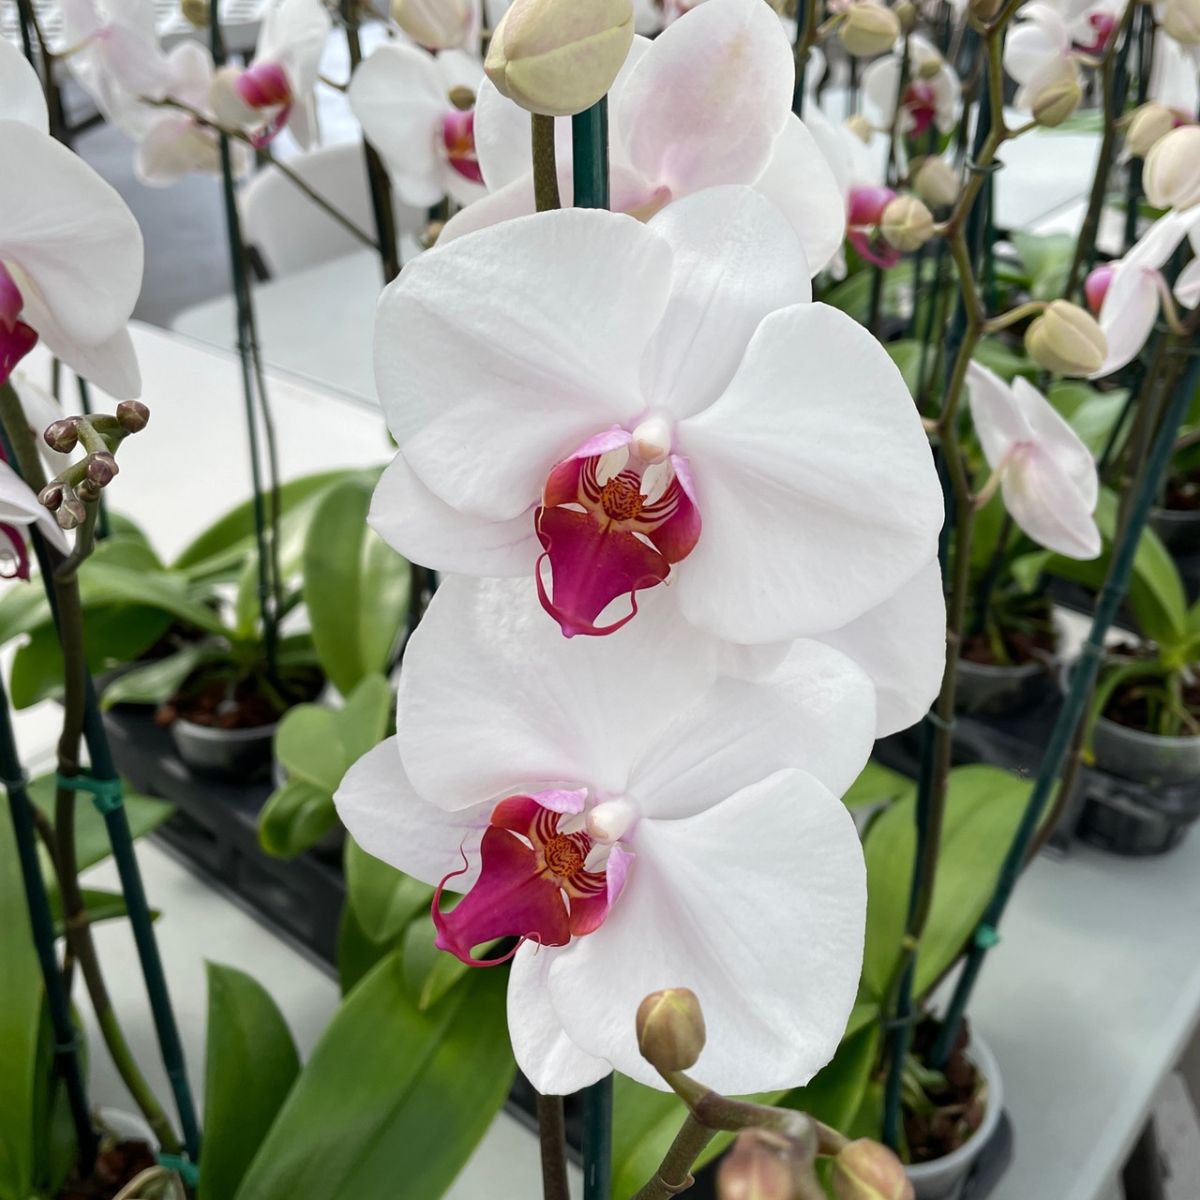 Gorgeous Phalaenopsis Splendid Orchid Flower - Unveiling Nature's Splendor and Grace